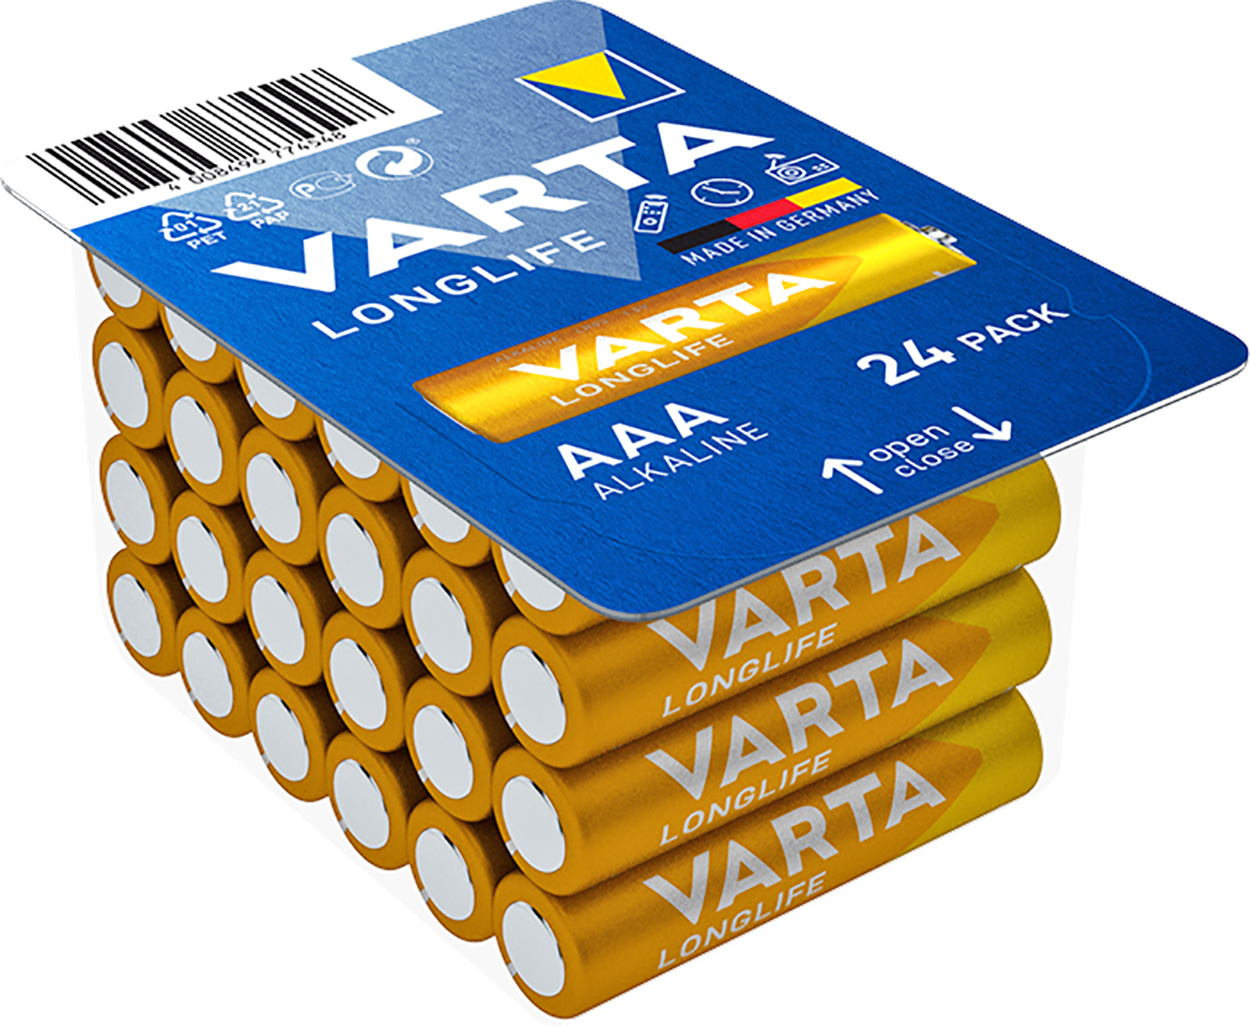 Varta Batterie Alkaline, Micro, AAA, LR03, 1.5V Longlife, Retail Box (24-Pack)